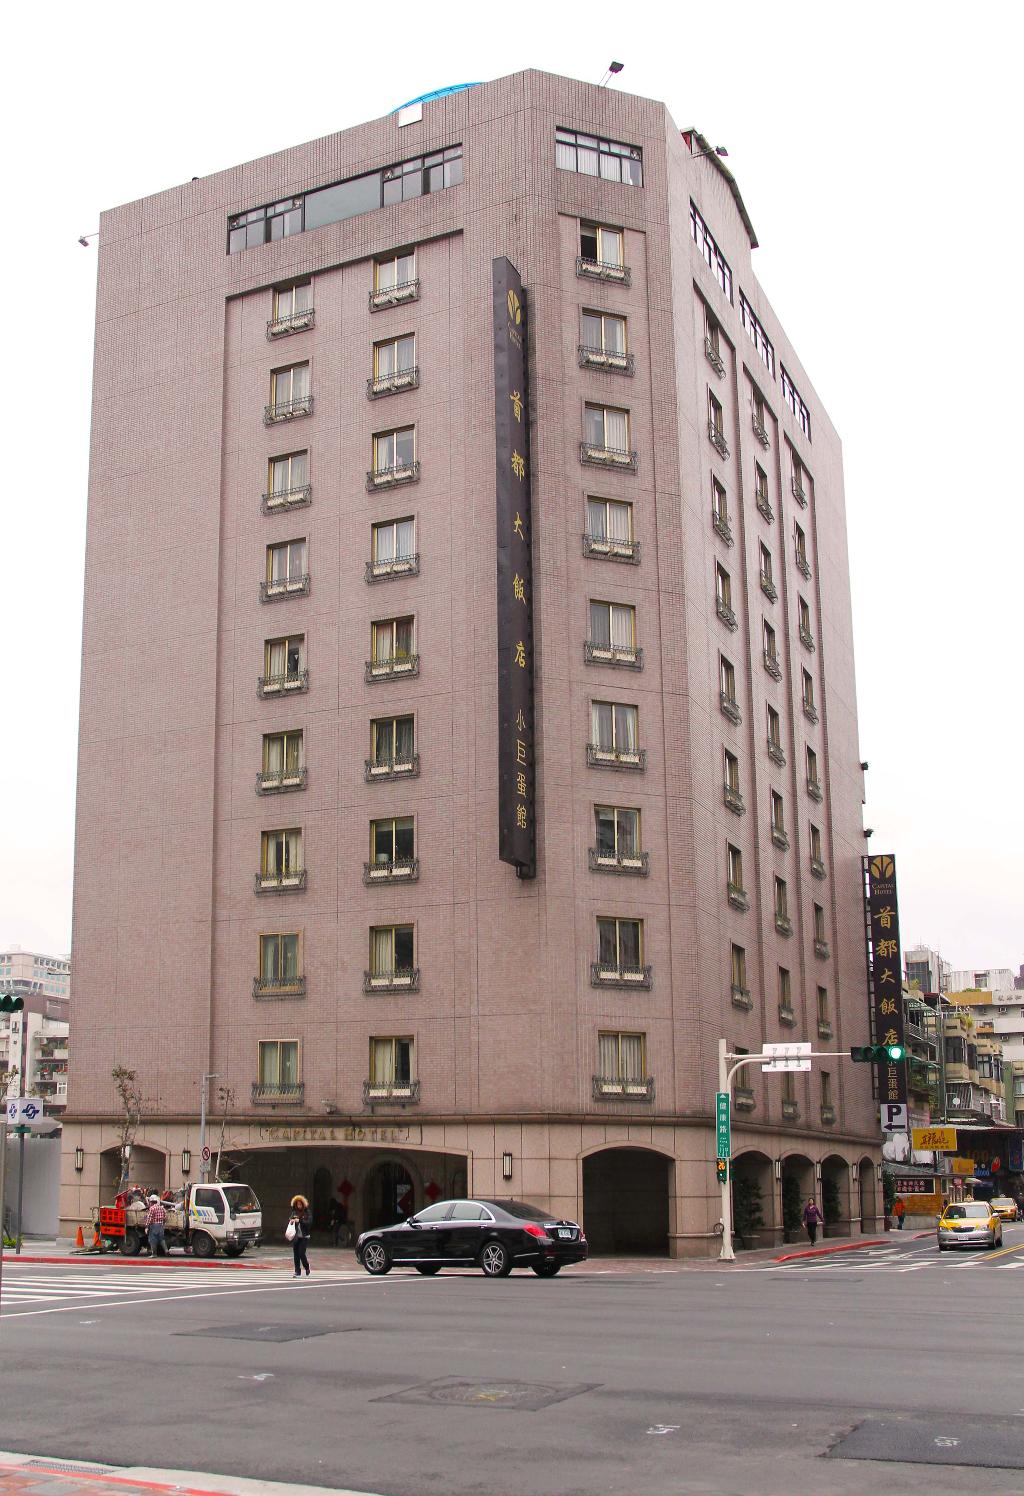 CAPITAL HOTEL ARENA